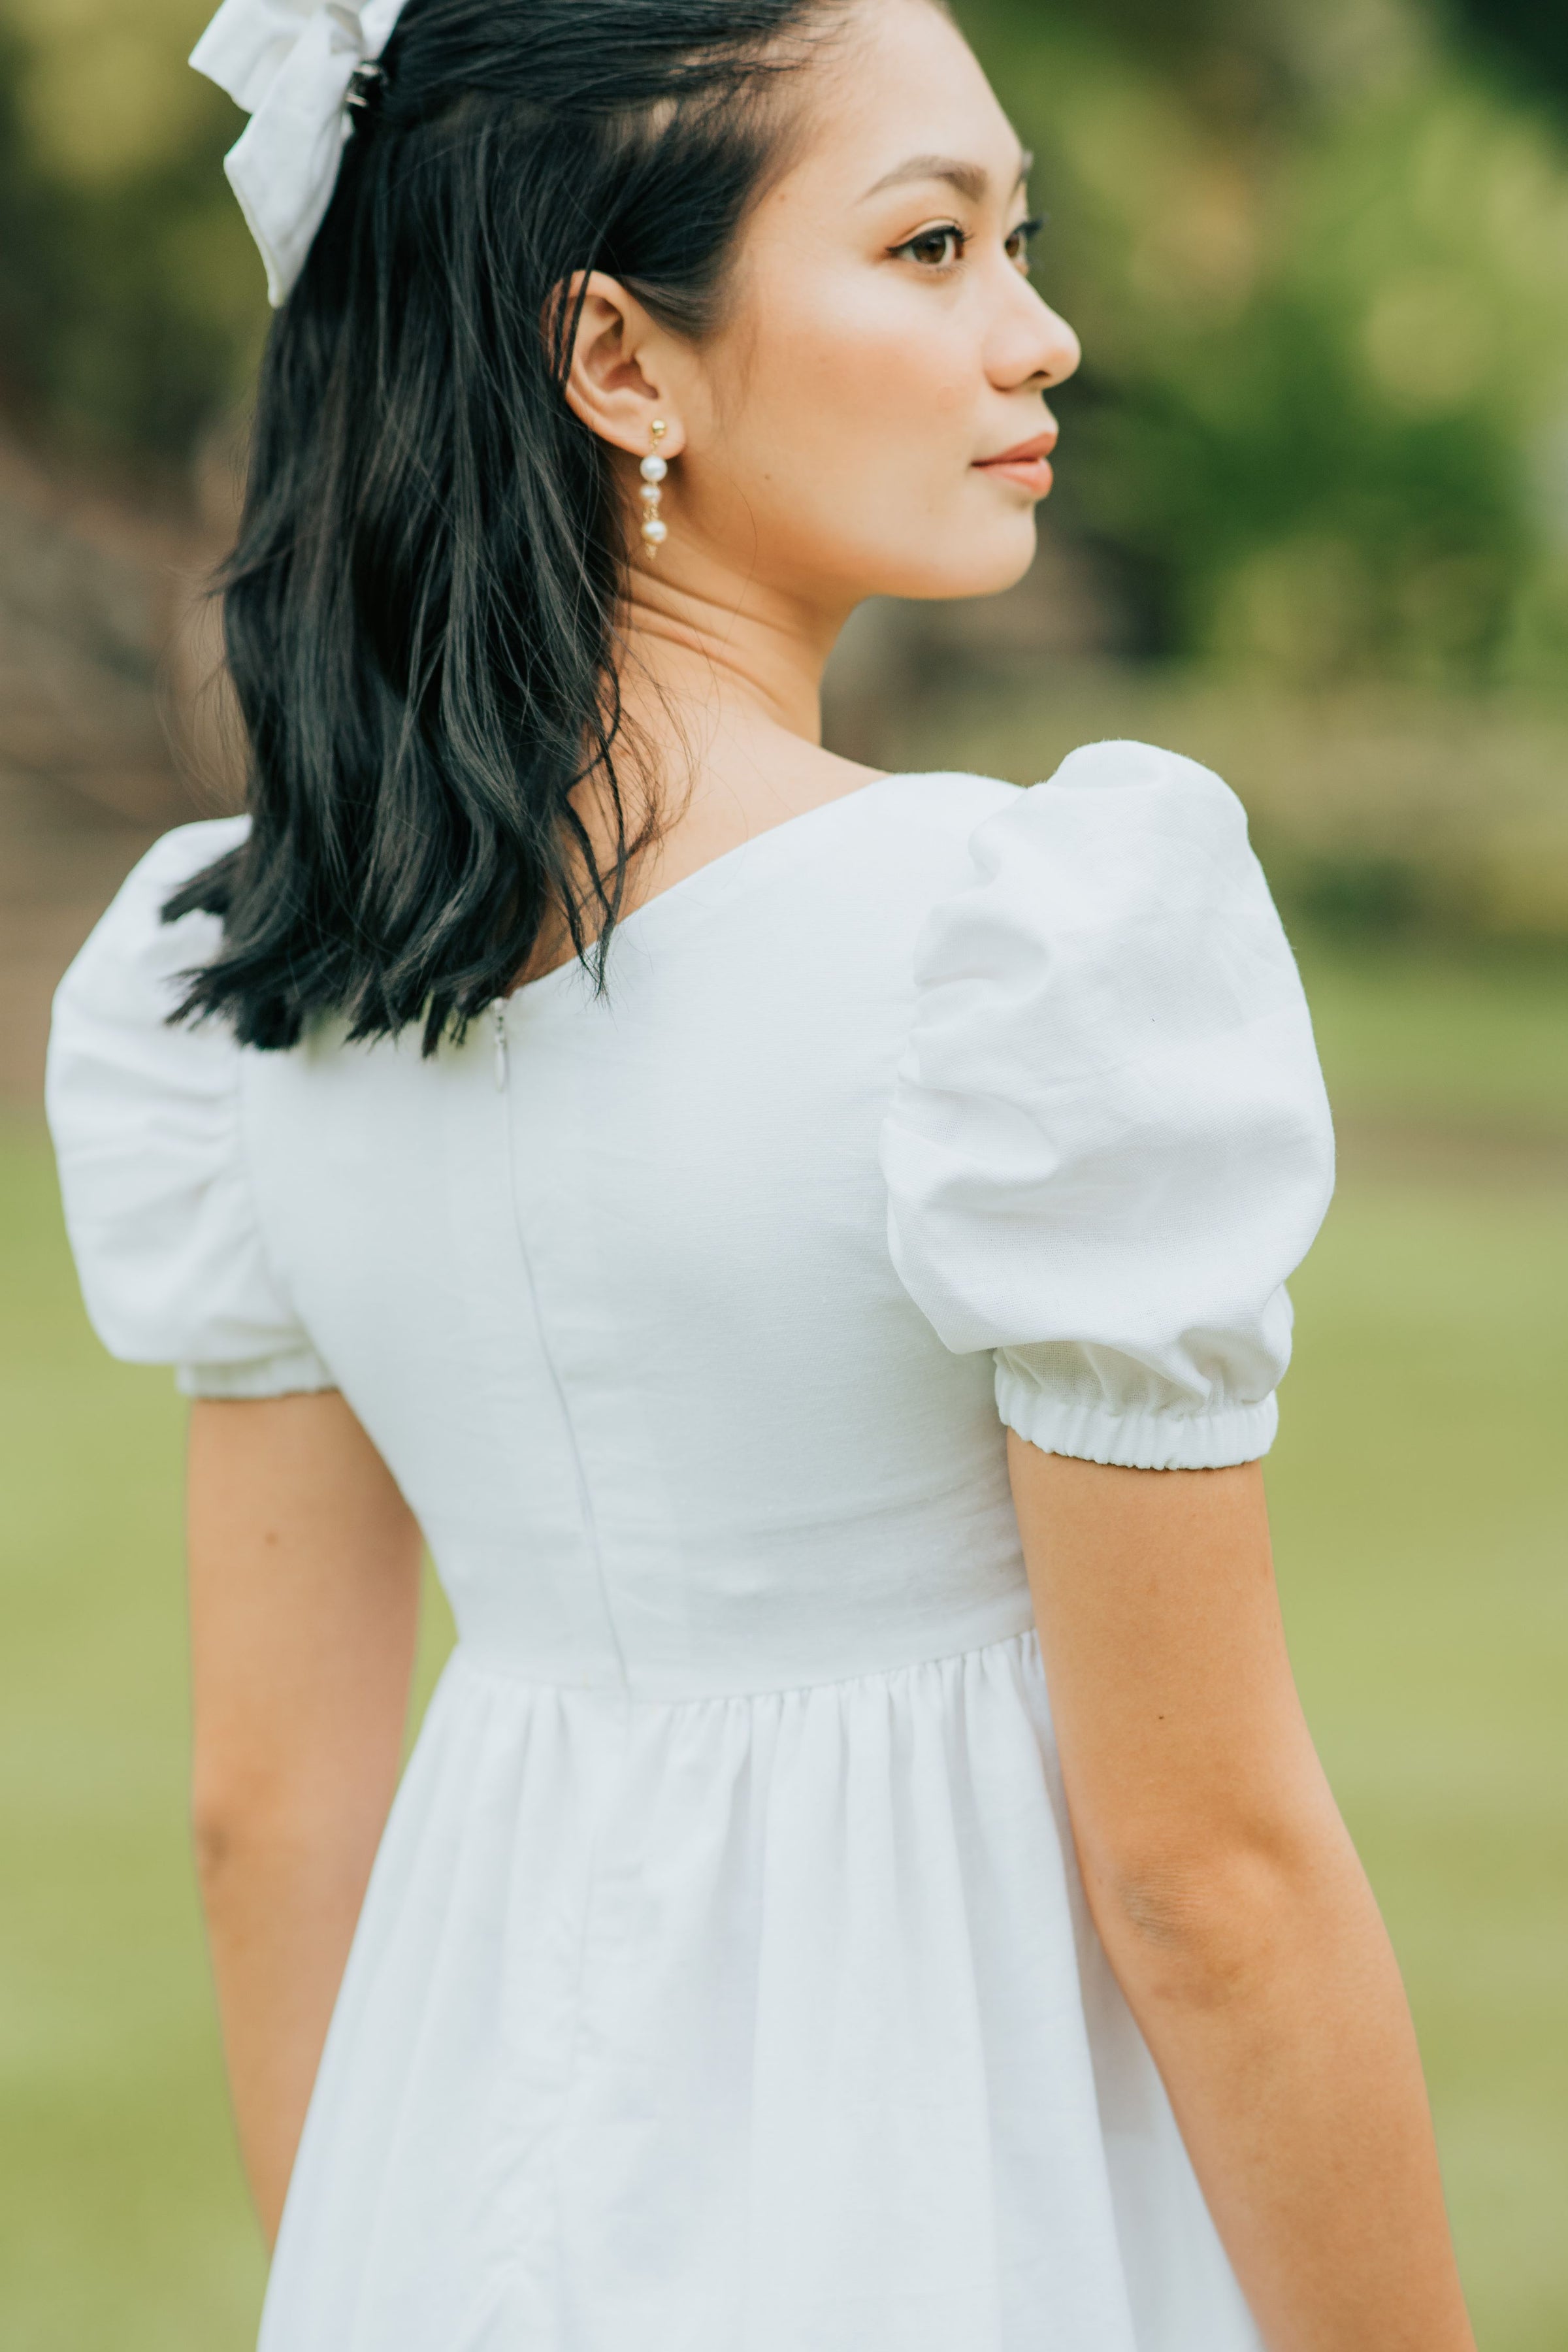 Kaylie Doll Dress in White